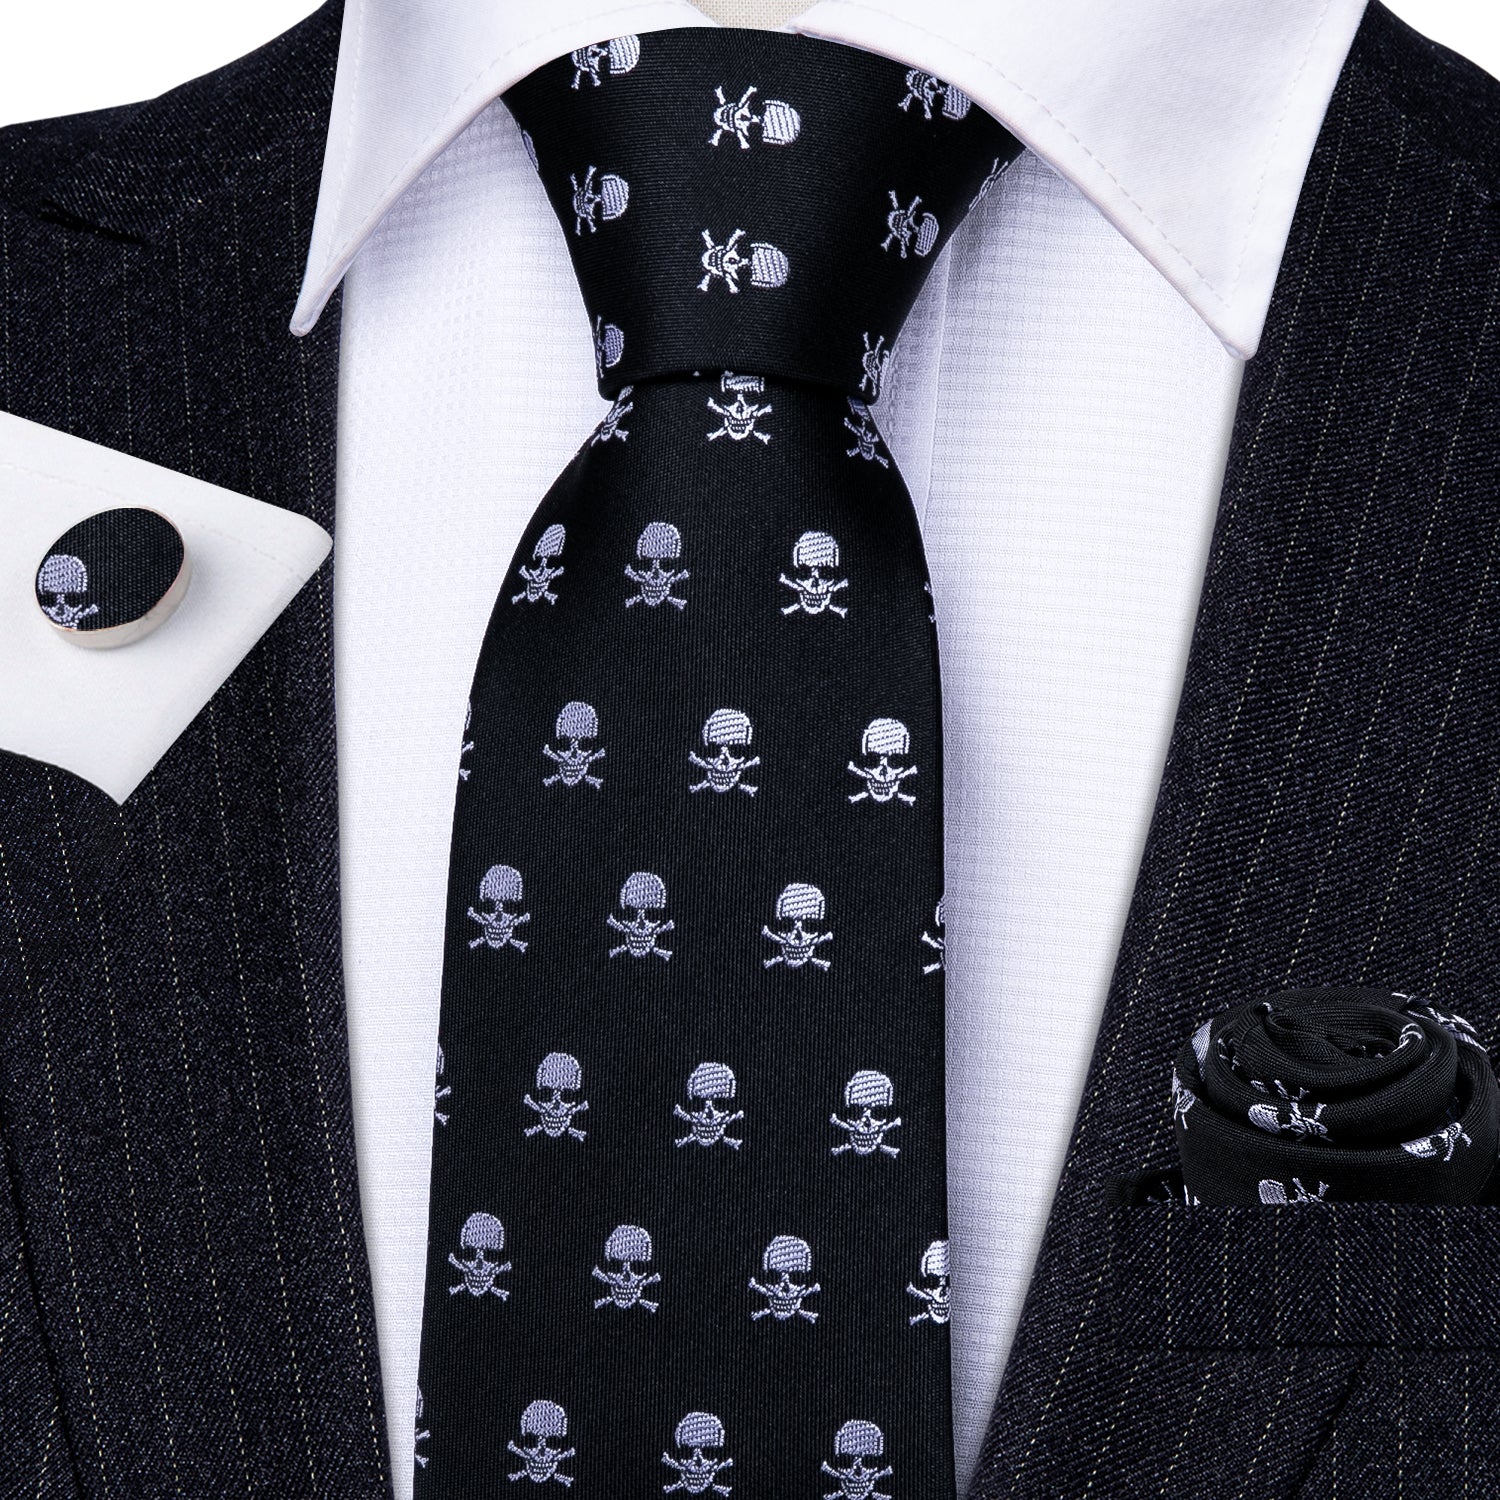 Barry.wang Men's Black Tie Skull Silk Tie Hanky Cufflinks Set New Arrival